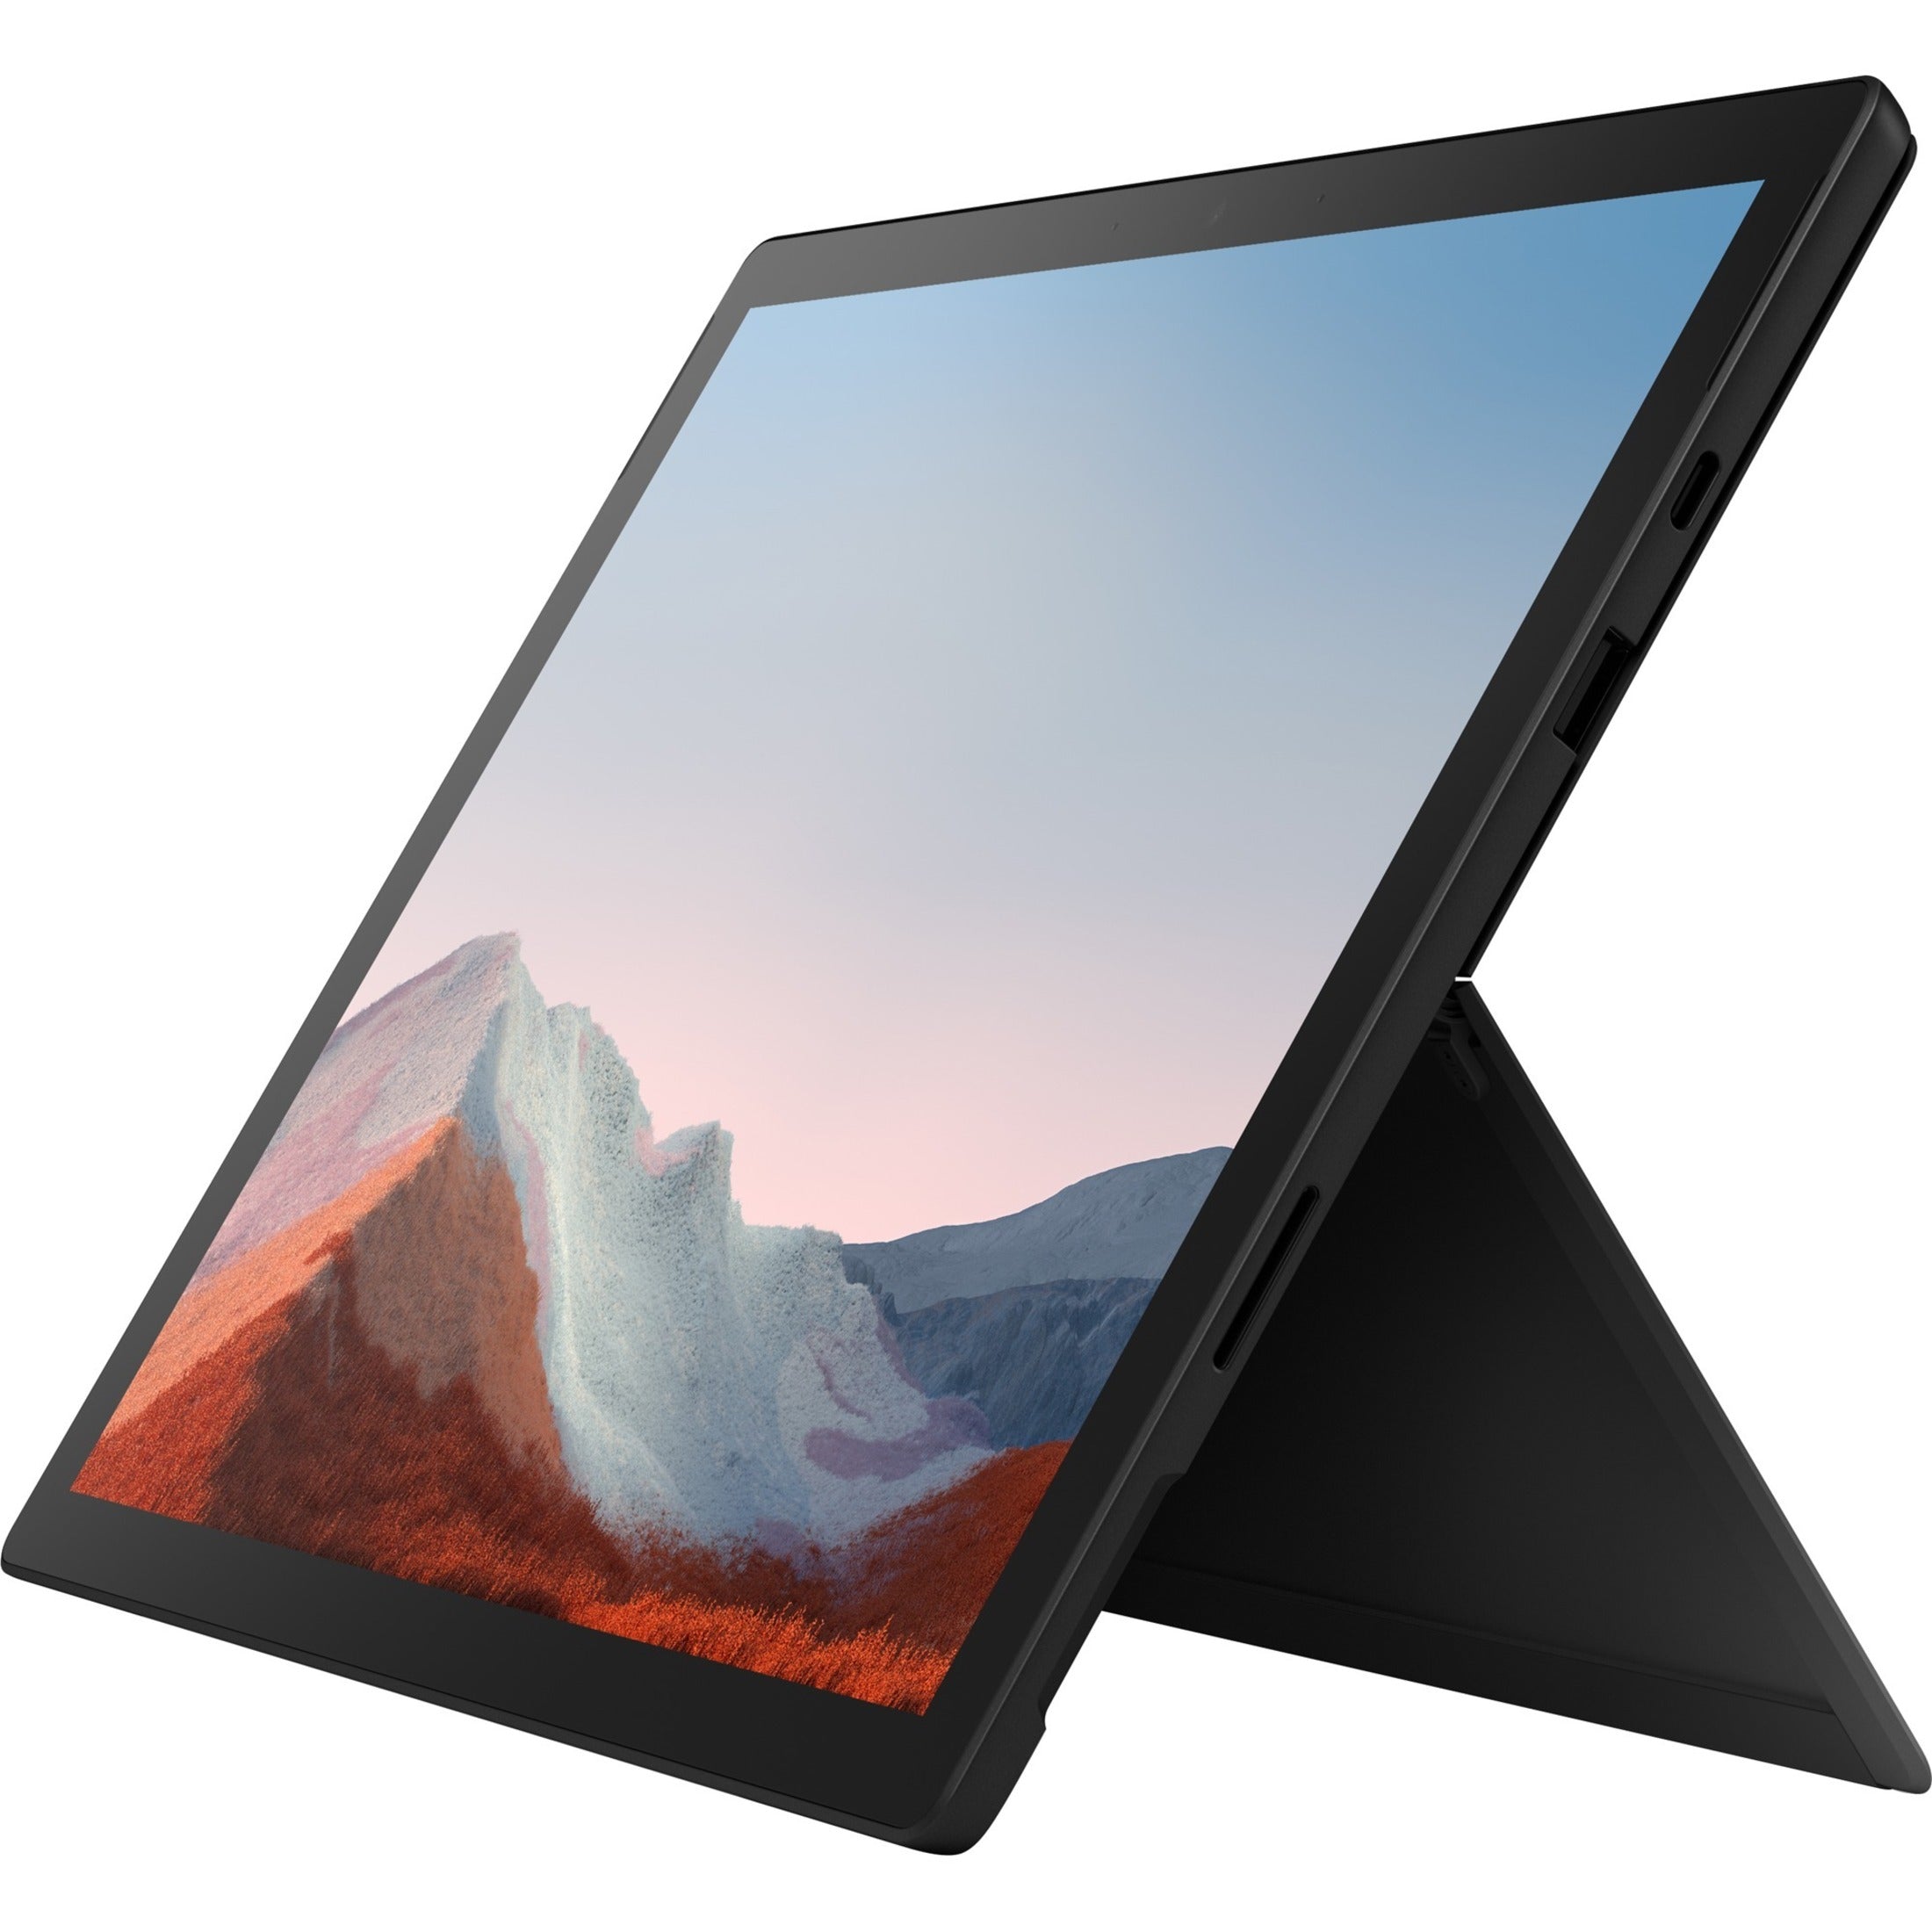 Microsoft V8Q-00001 Surface Pro 7+ Tablet, 12.3 Core i5 11th Gen, 16GB RAM, 256GB SSD, Windows 10, Black